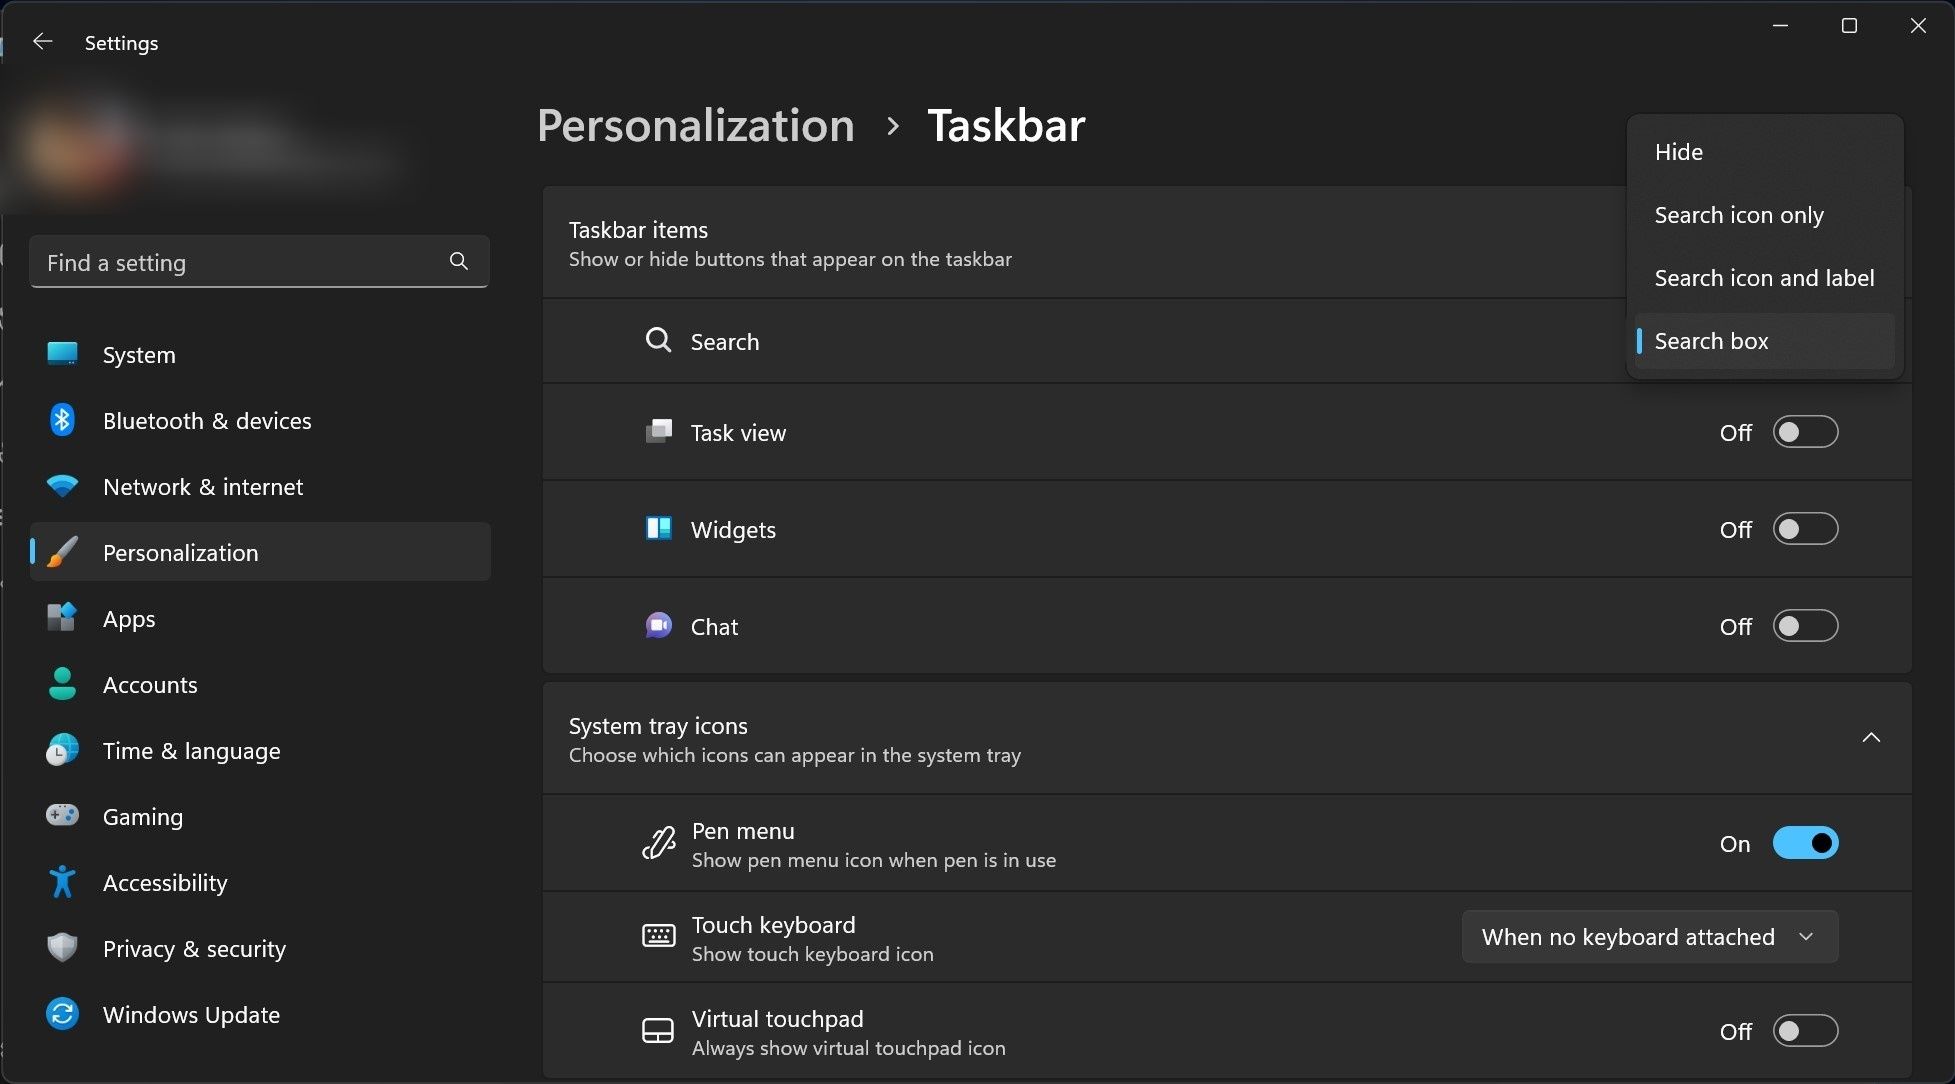 Search design options in Taskbar